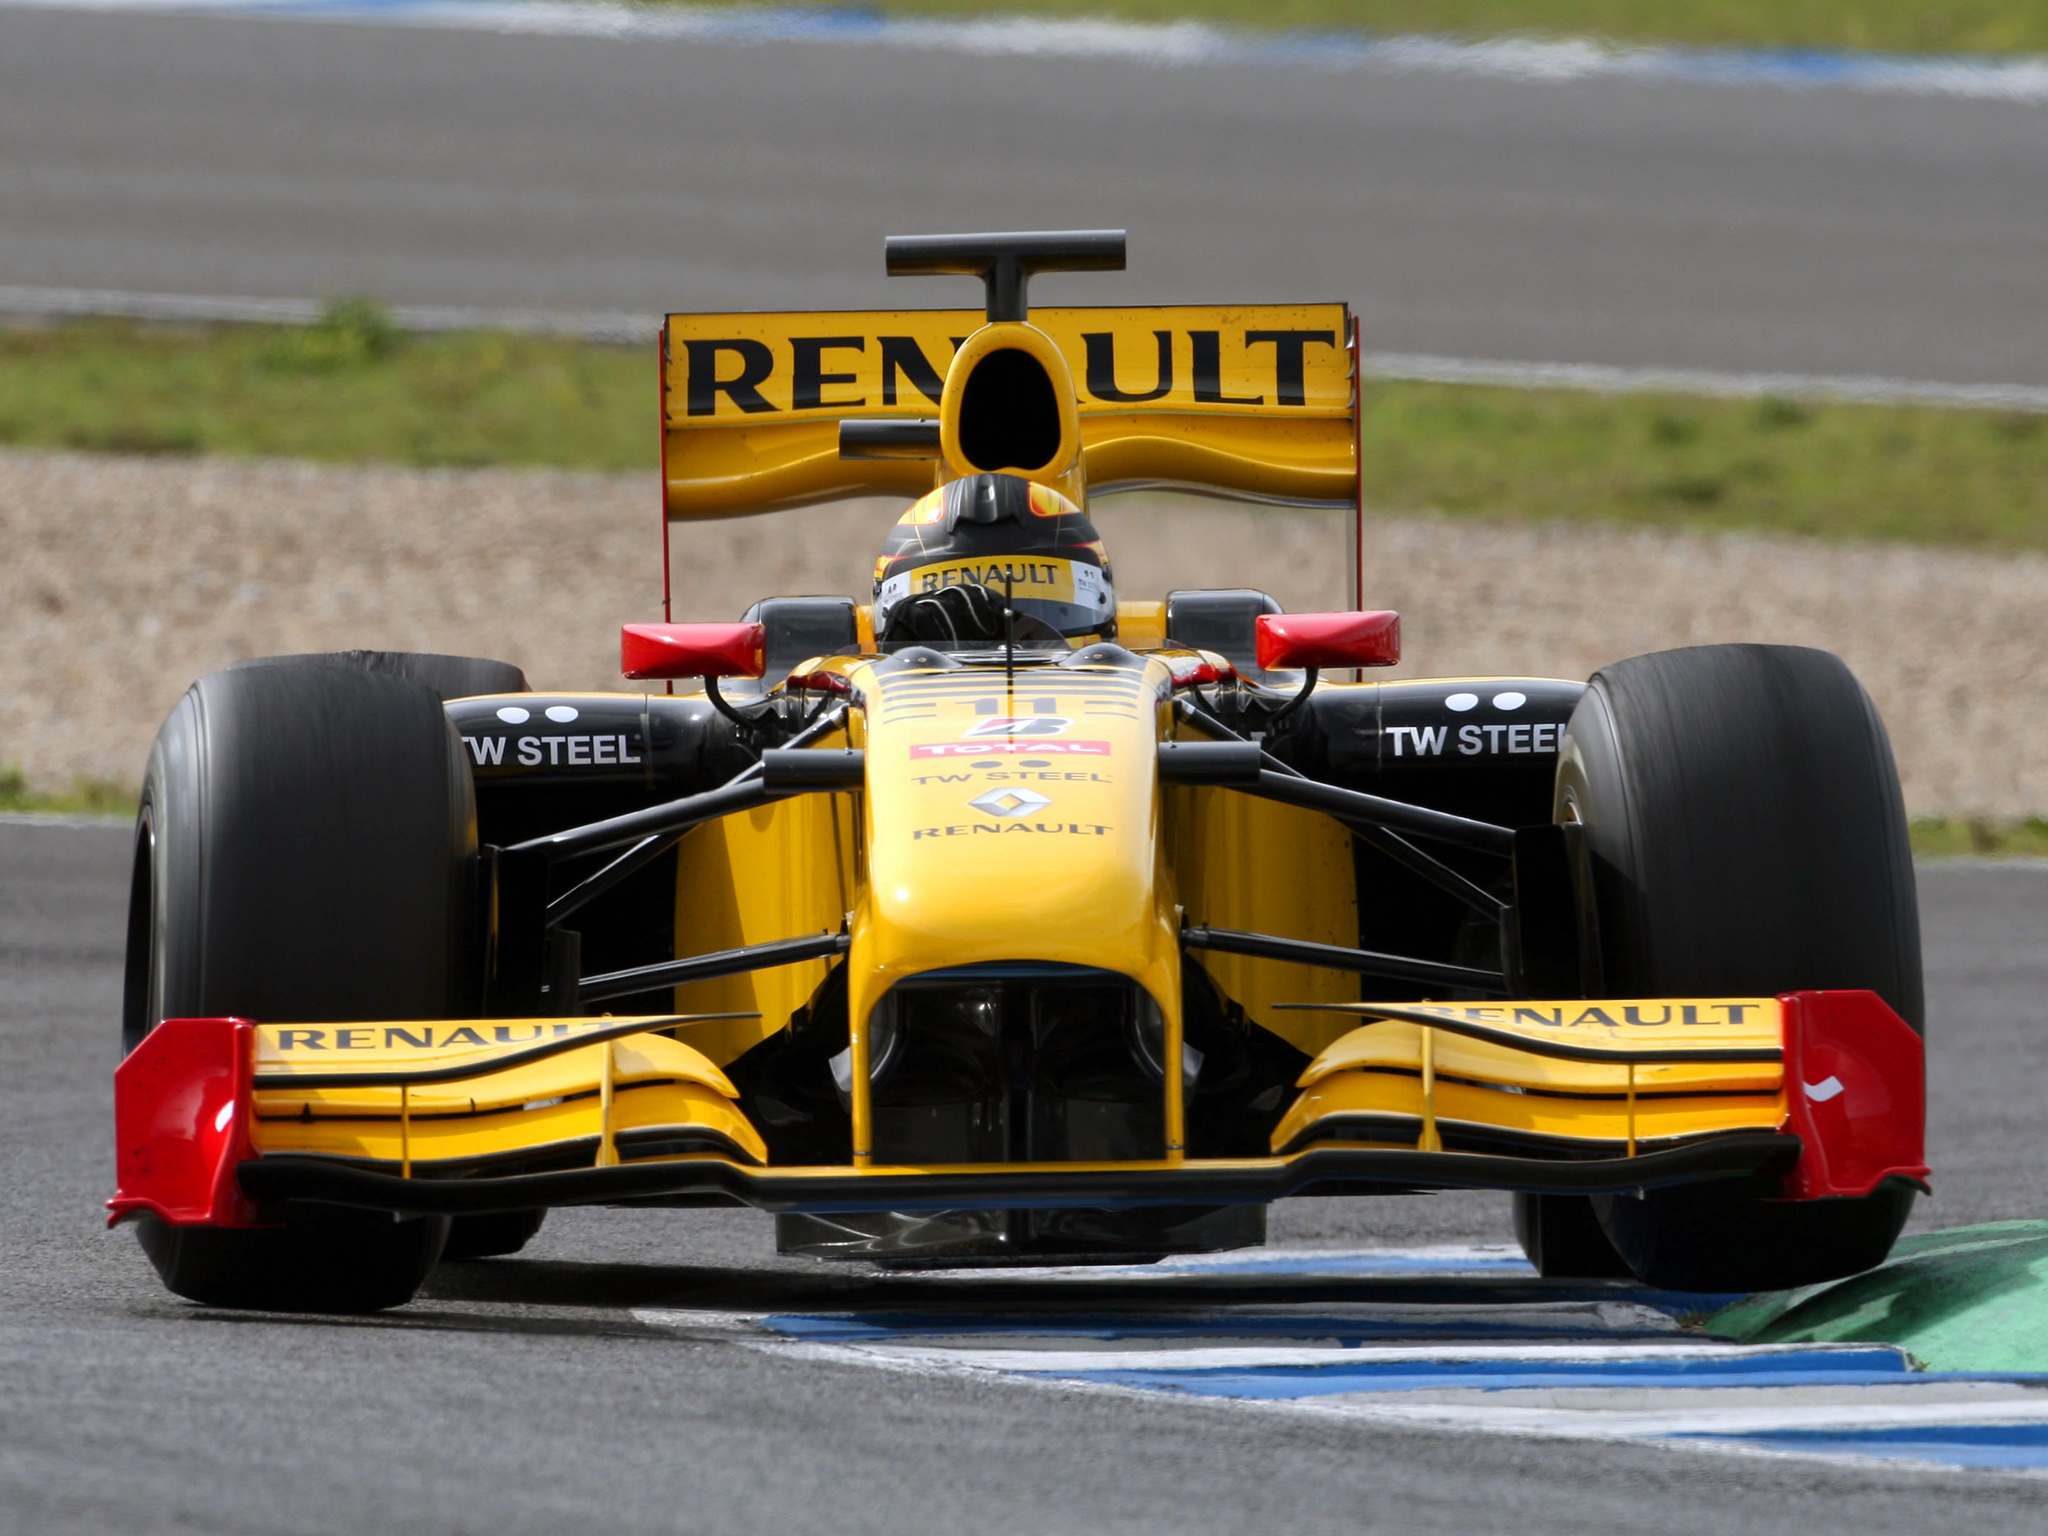 2010, Renault, R30, Formula, One, Formula 1, F 1, Race, Racing, Gd Wallpaper